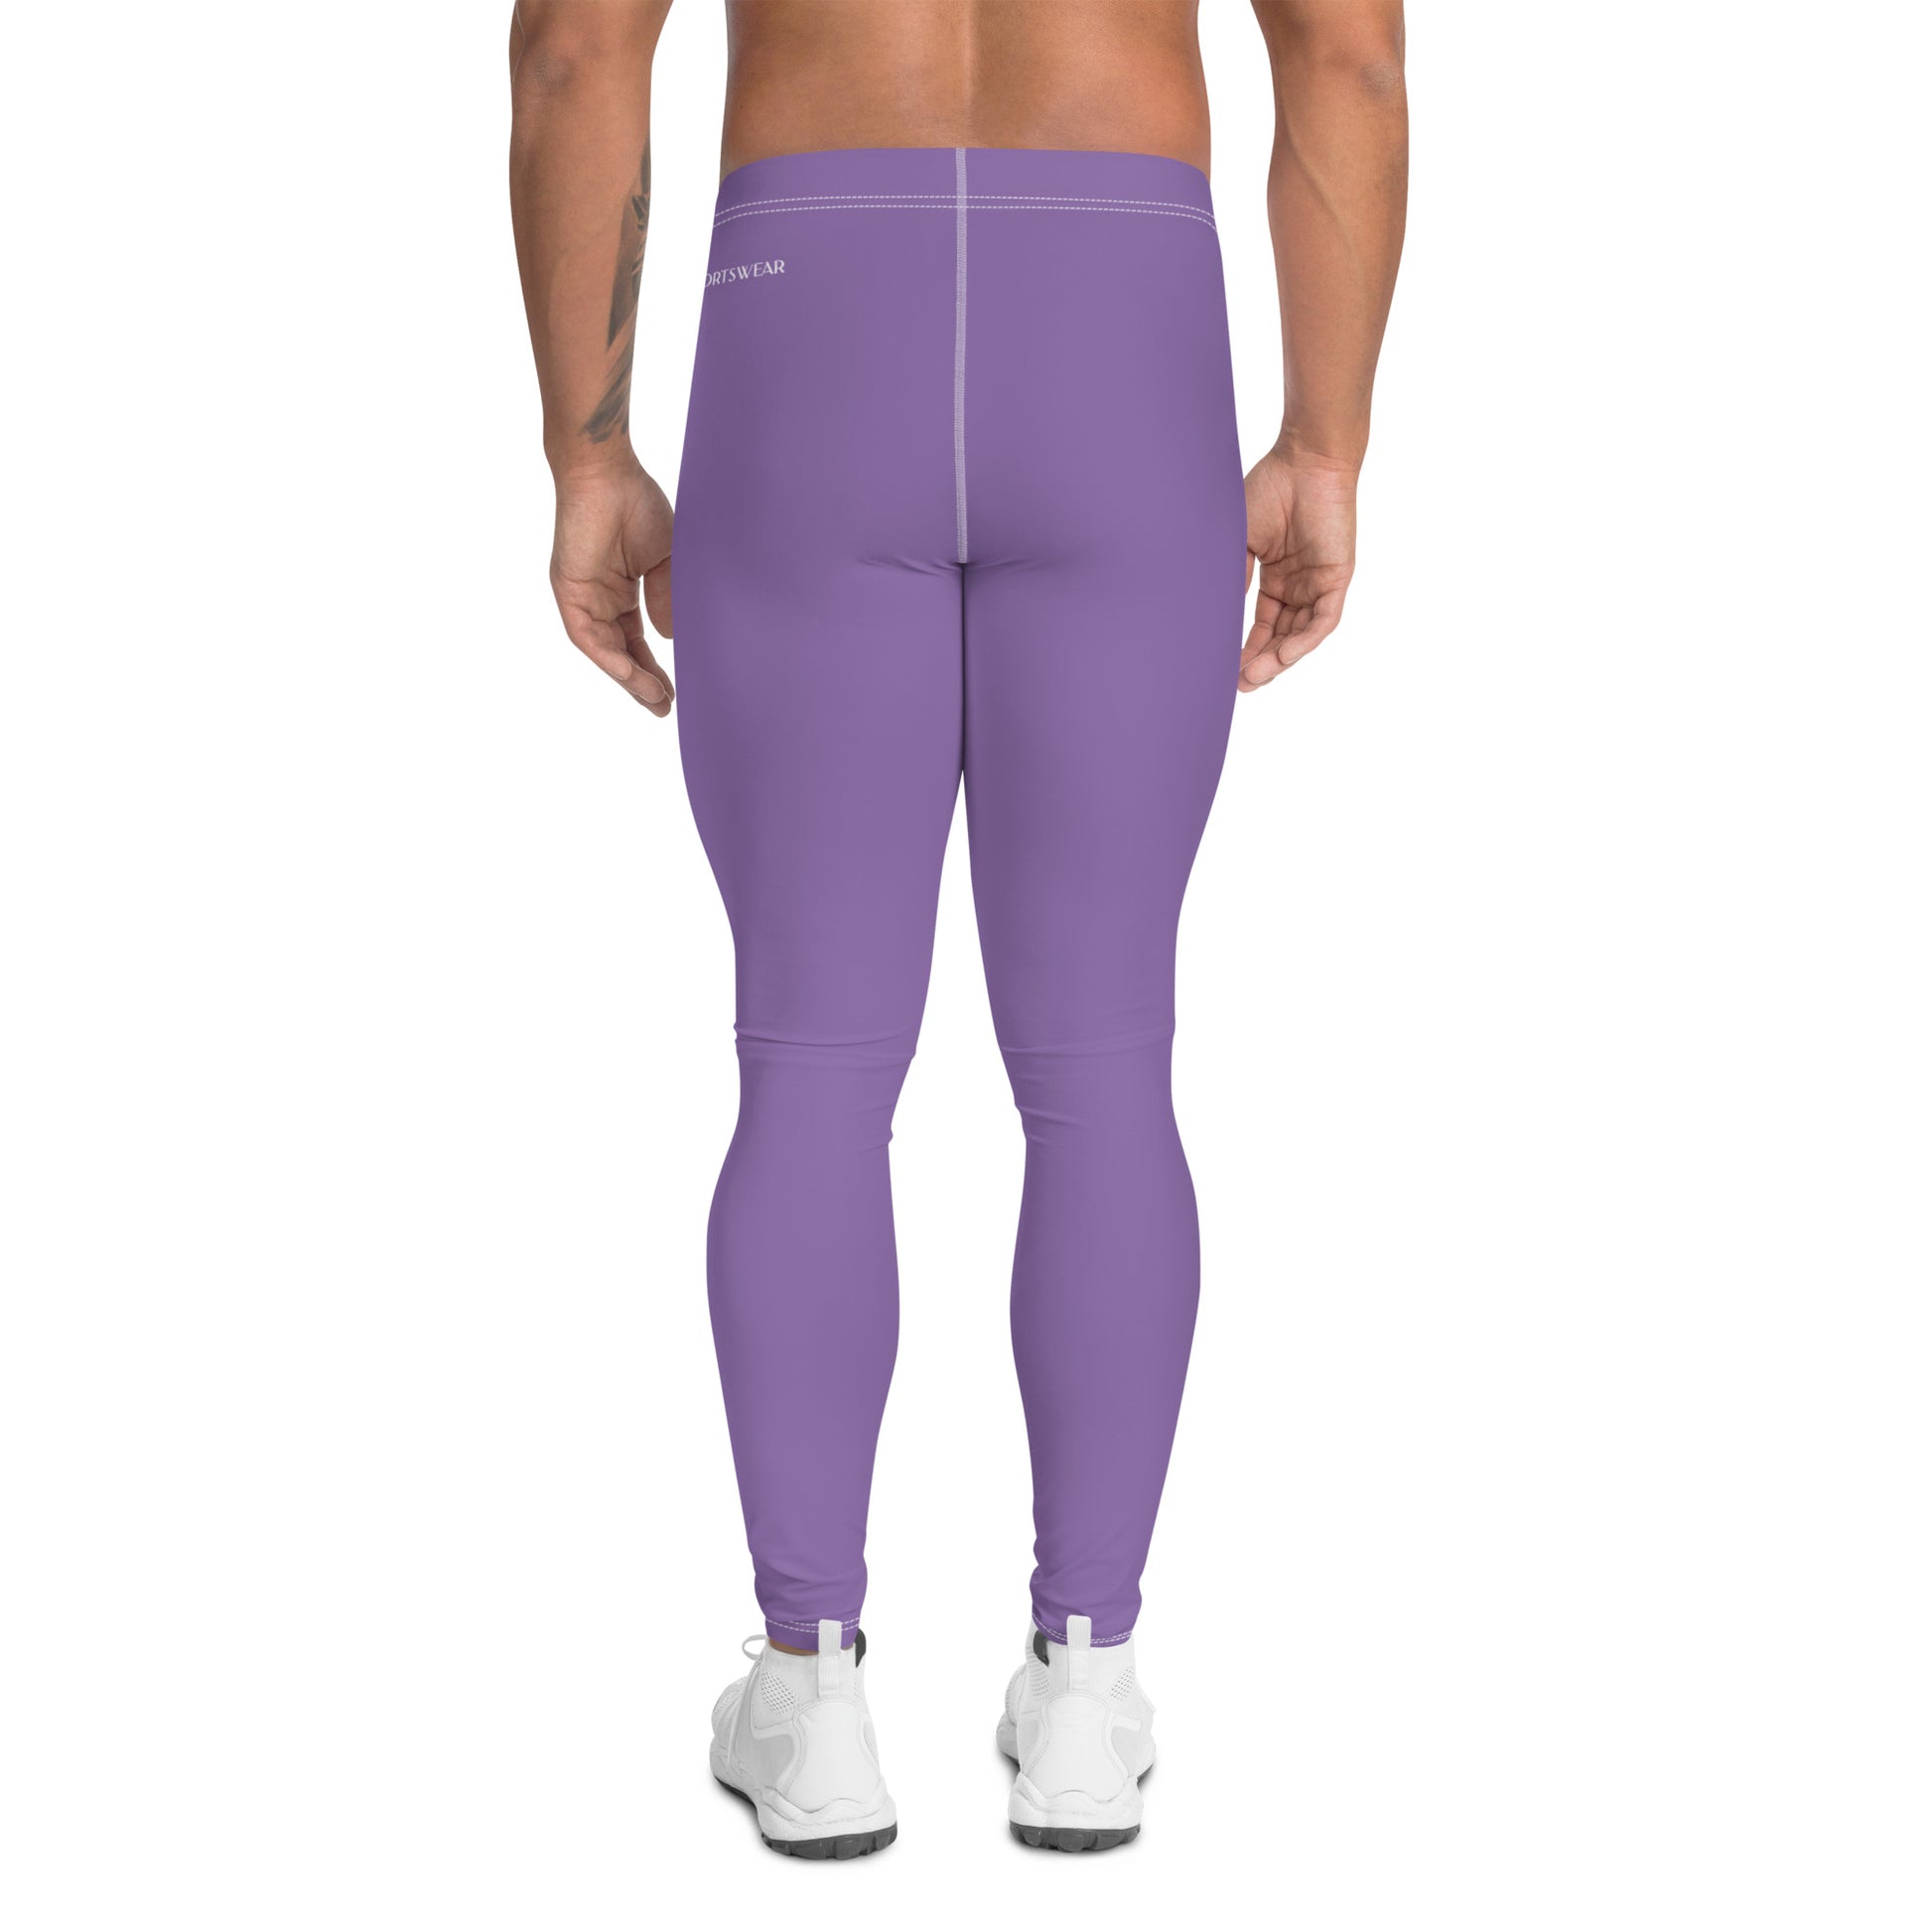 Humble Sportswear, men's color match long activewear stretchy leggings, purple